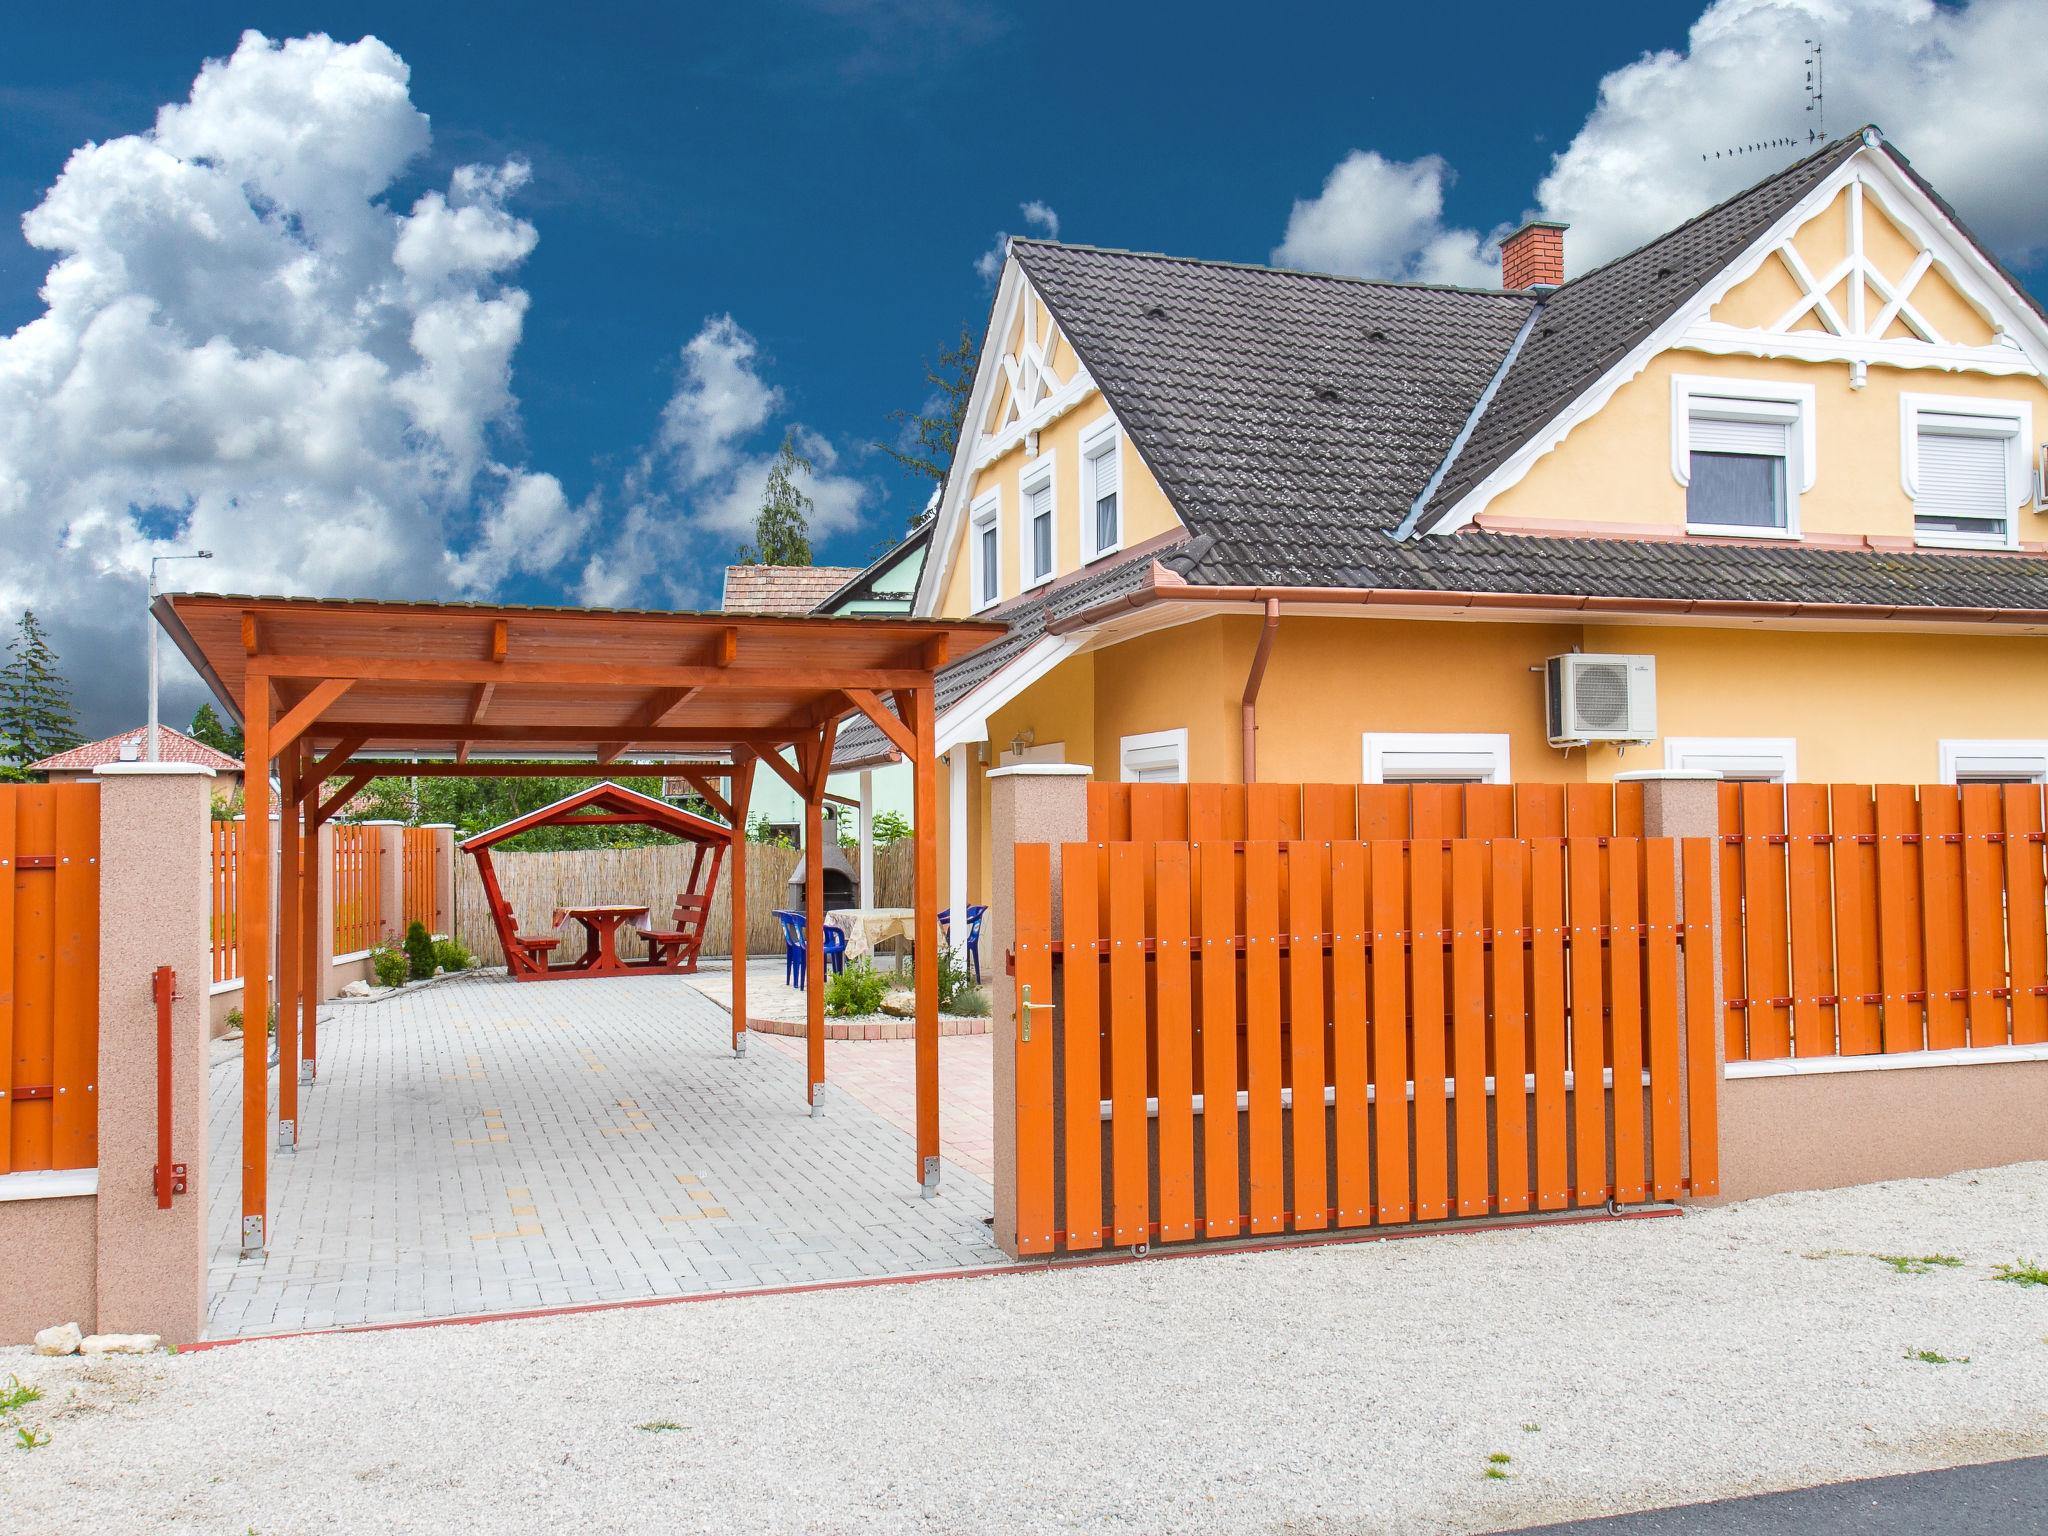 Photo 1 - Maison de 3 chambres à Balatonkeresztúr avec jardin et terrasse